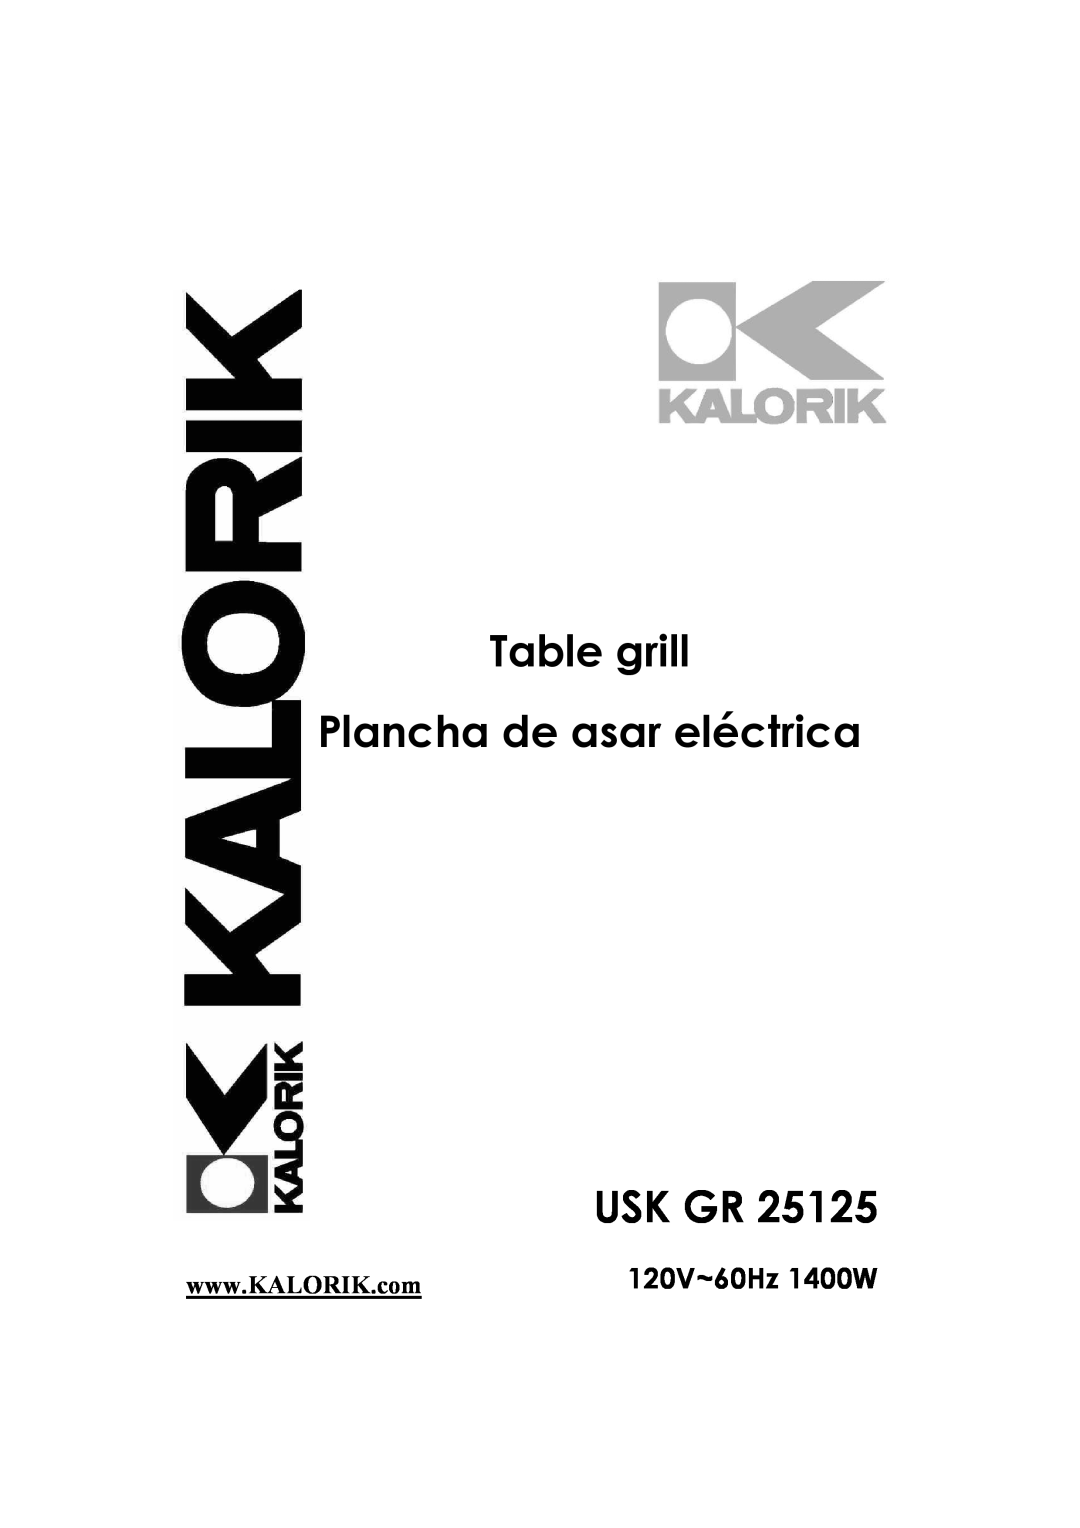 Kalorik USK GR 25125 manual Table grill Plancha de asar eléctrica USK GR, 120V~60Hz 1400W 